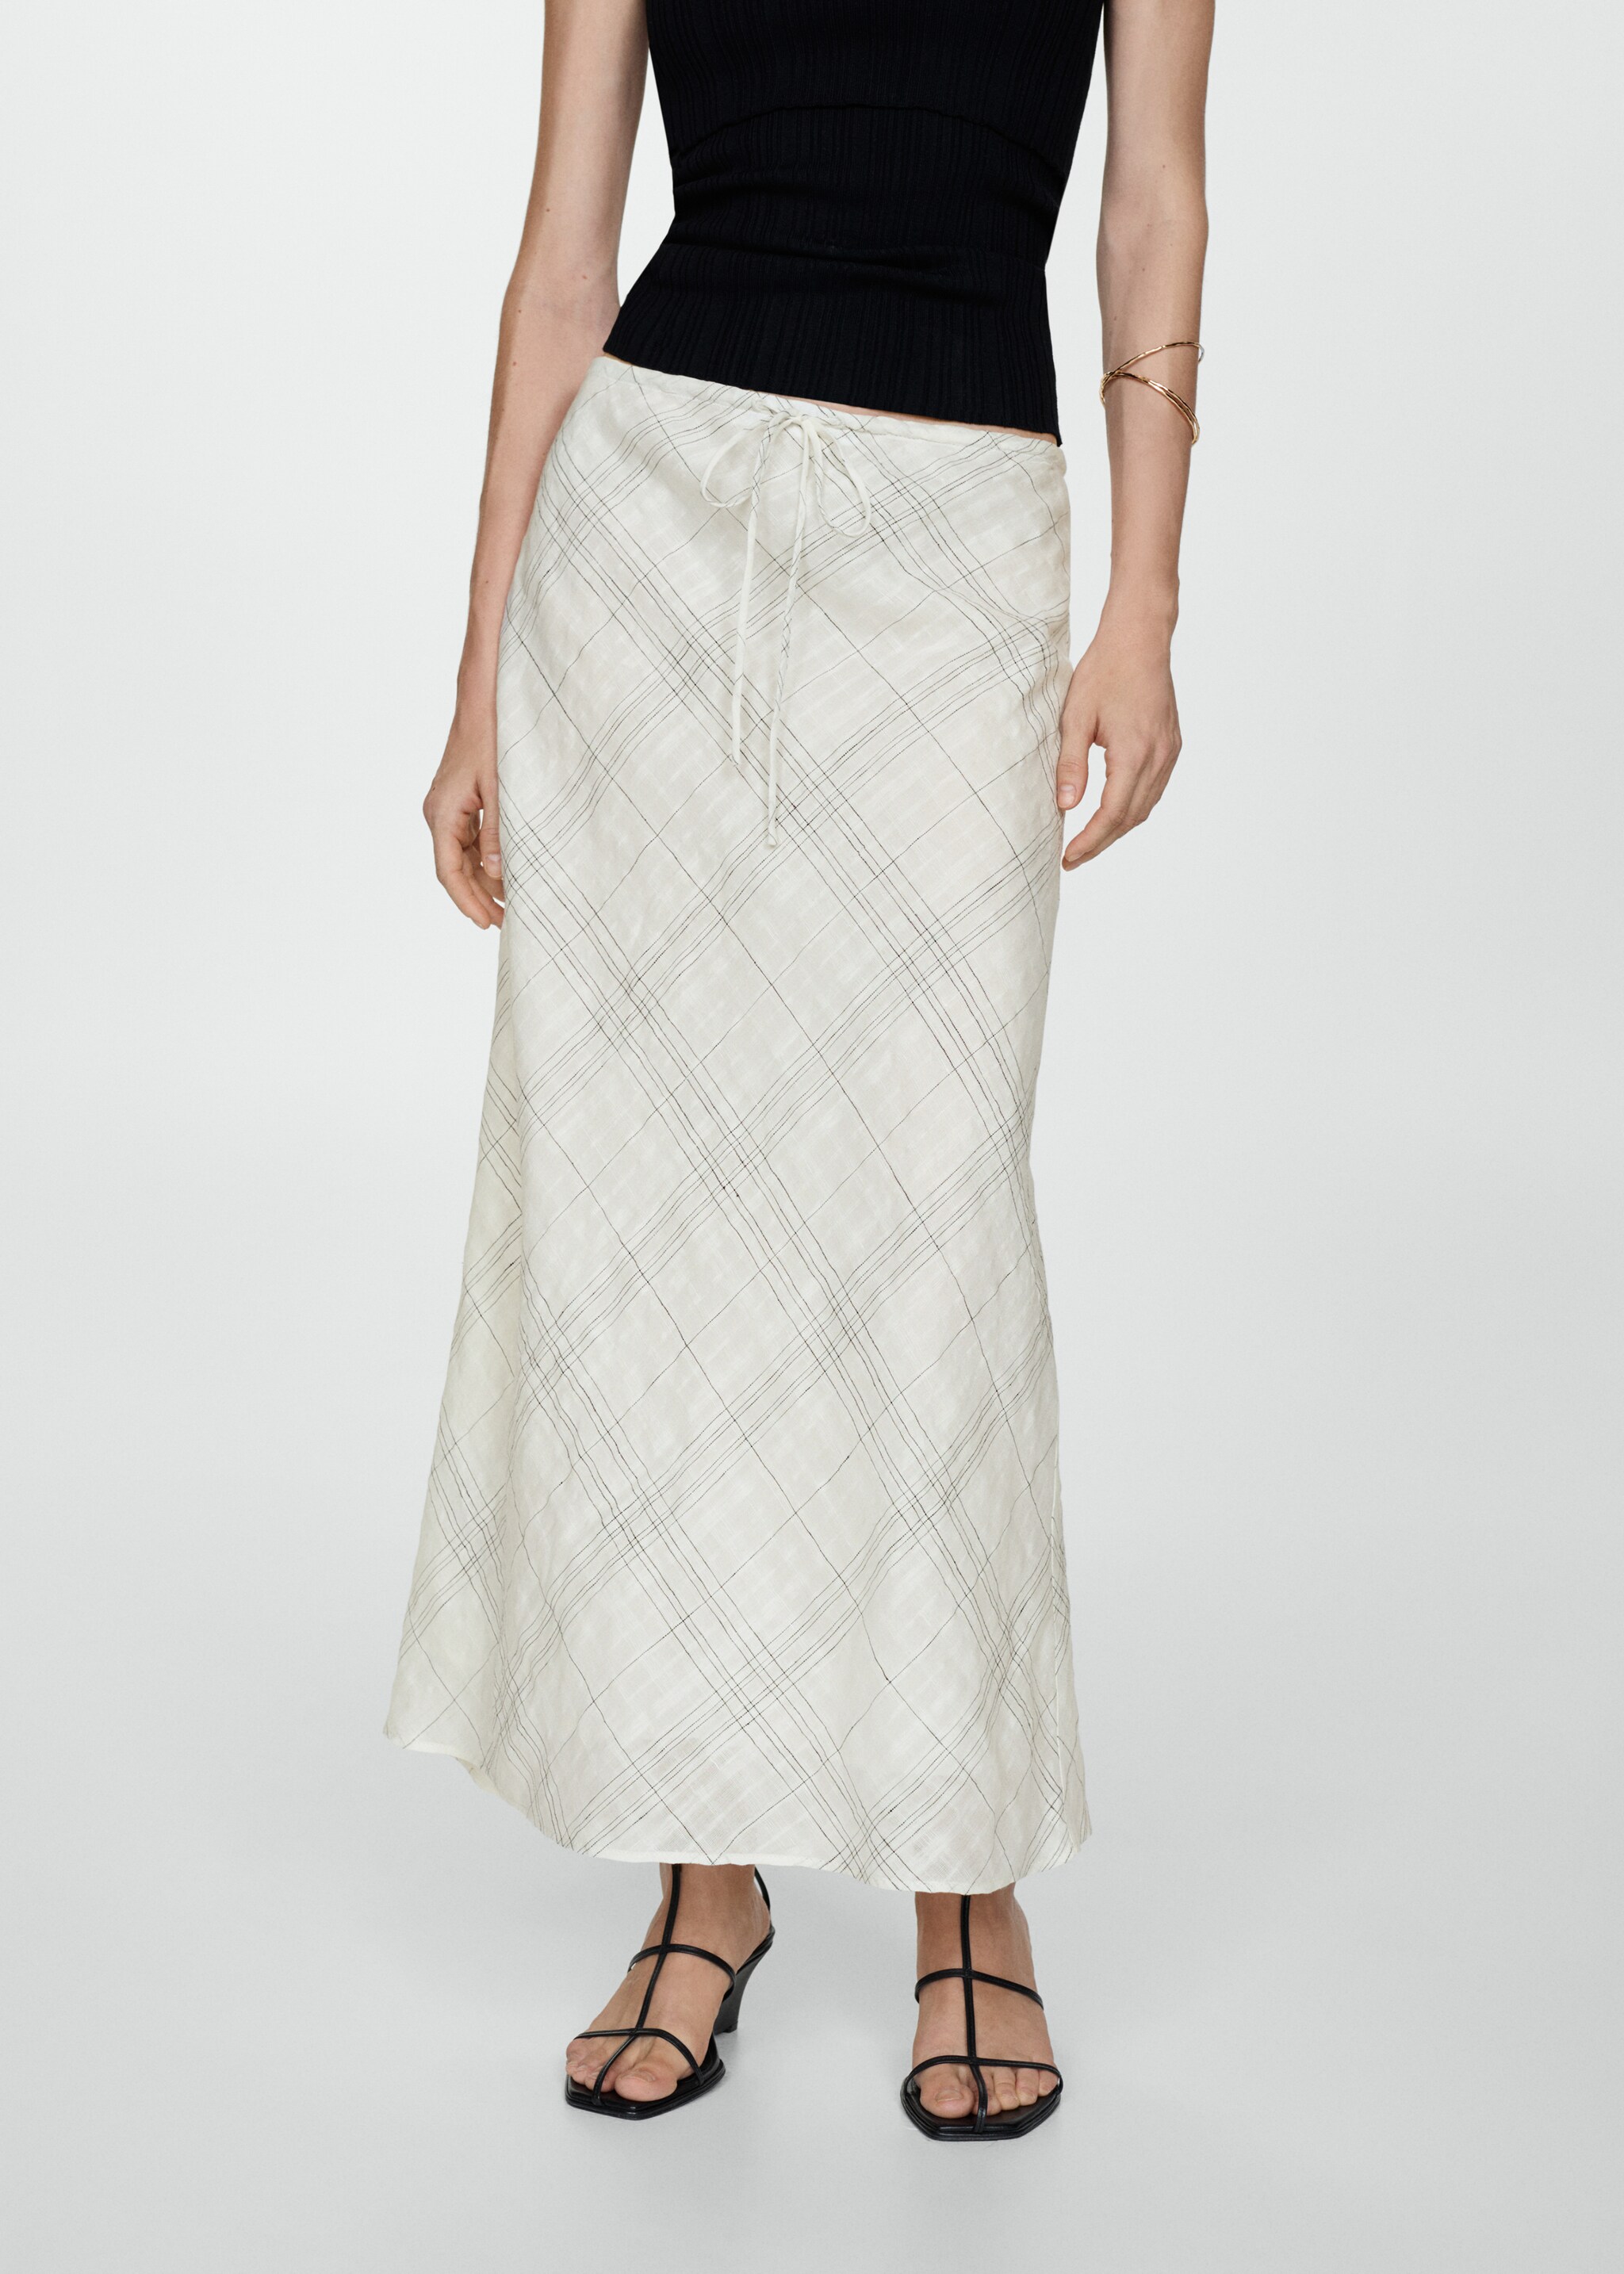 Printed linen-blend skirt - Medium plane